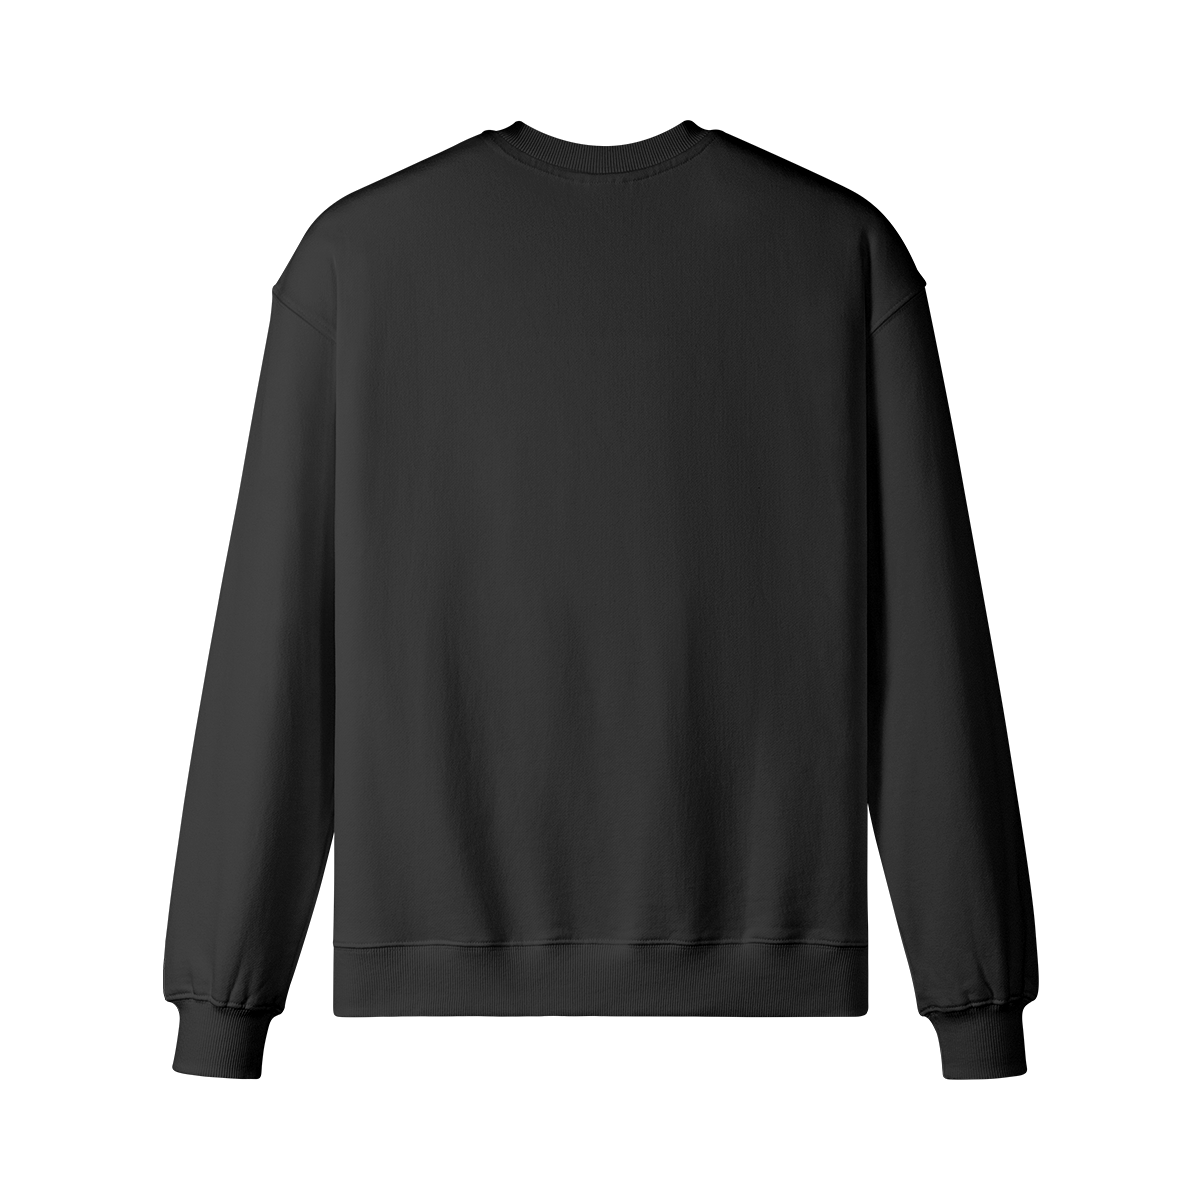 I SEE FLAVORS - Unisex Oversized Sweatshirt